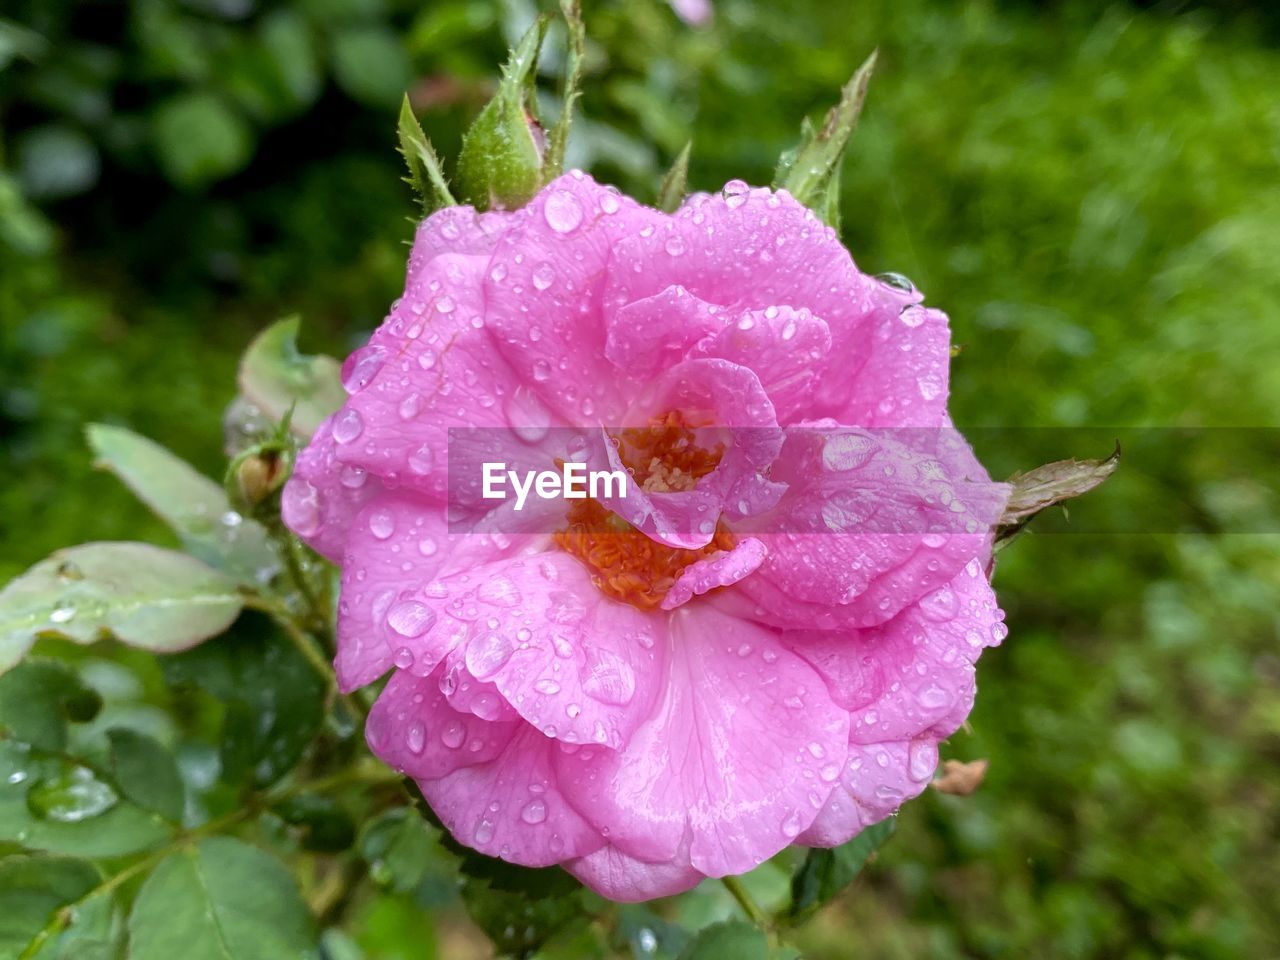 Pink rose in garden 